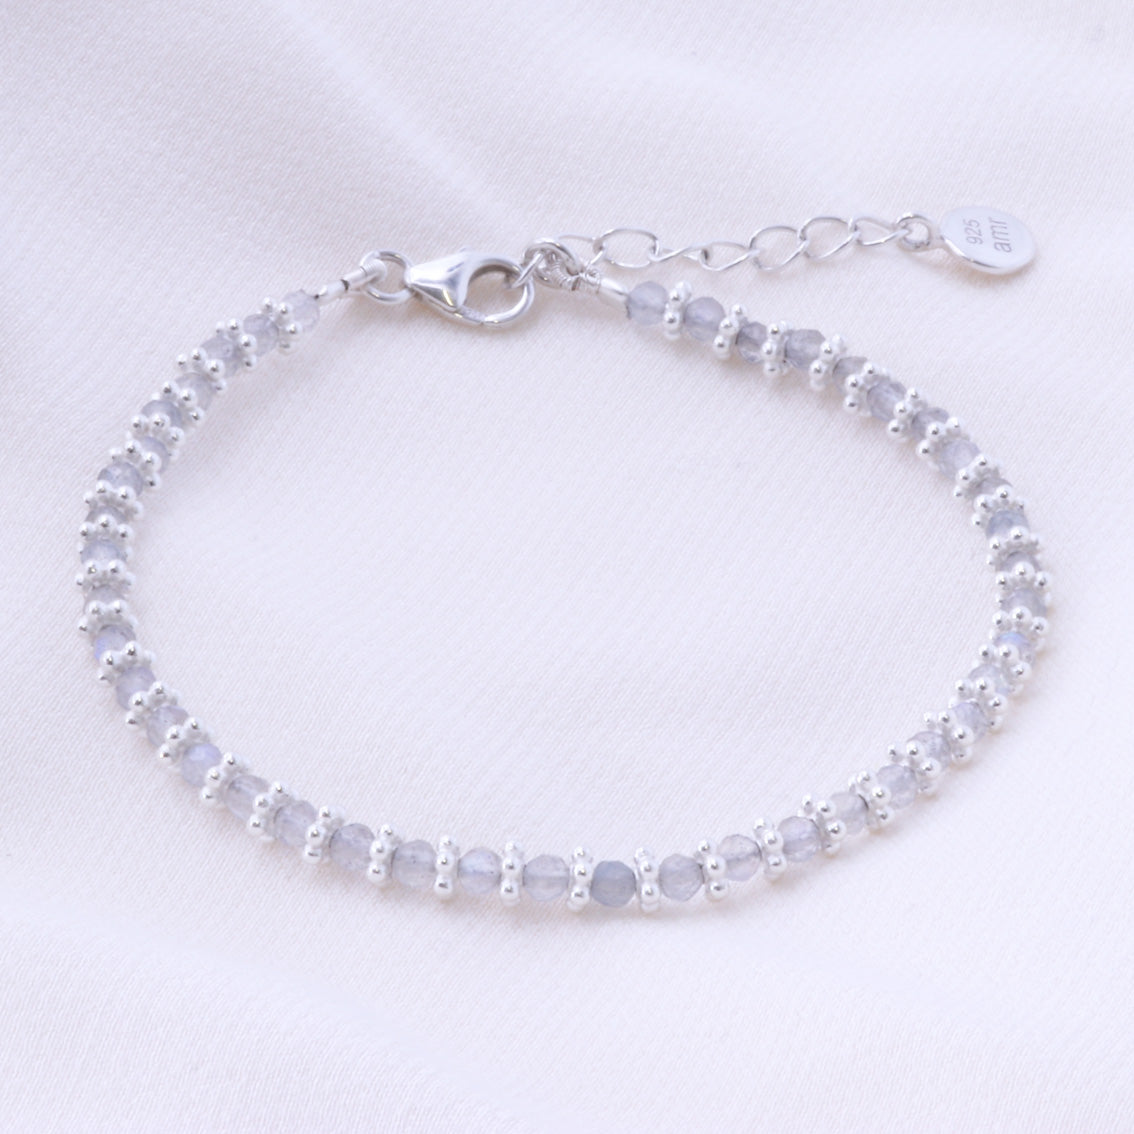 silver labradorite bracelet on a white background